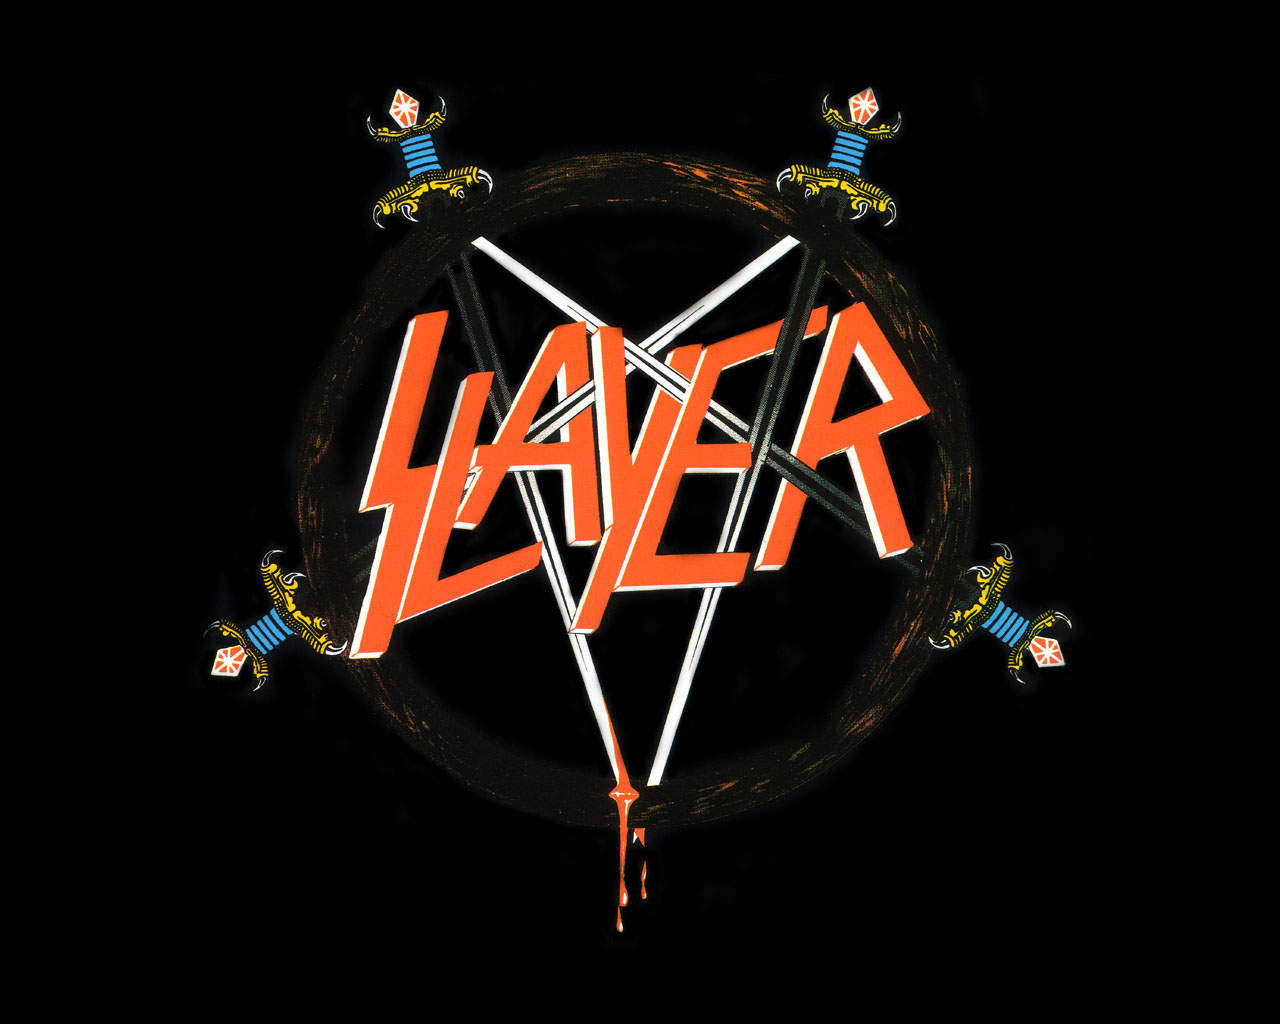 Slayer Wallpaper Logo Right Click To Save